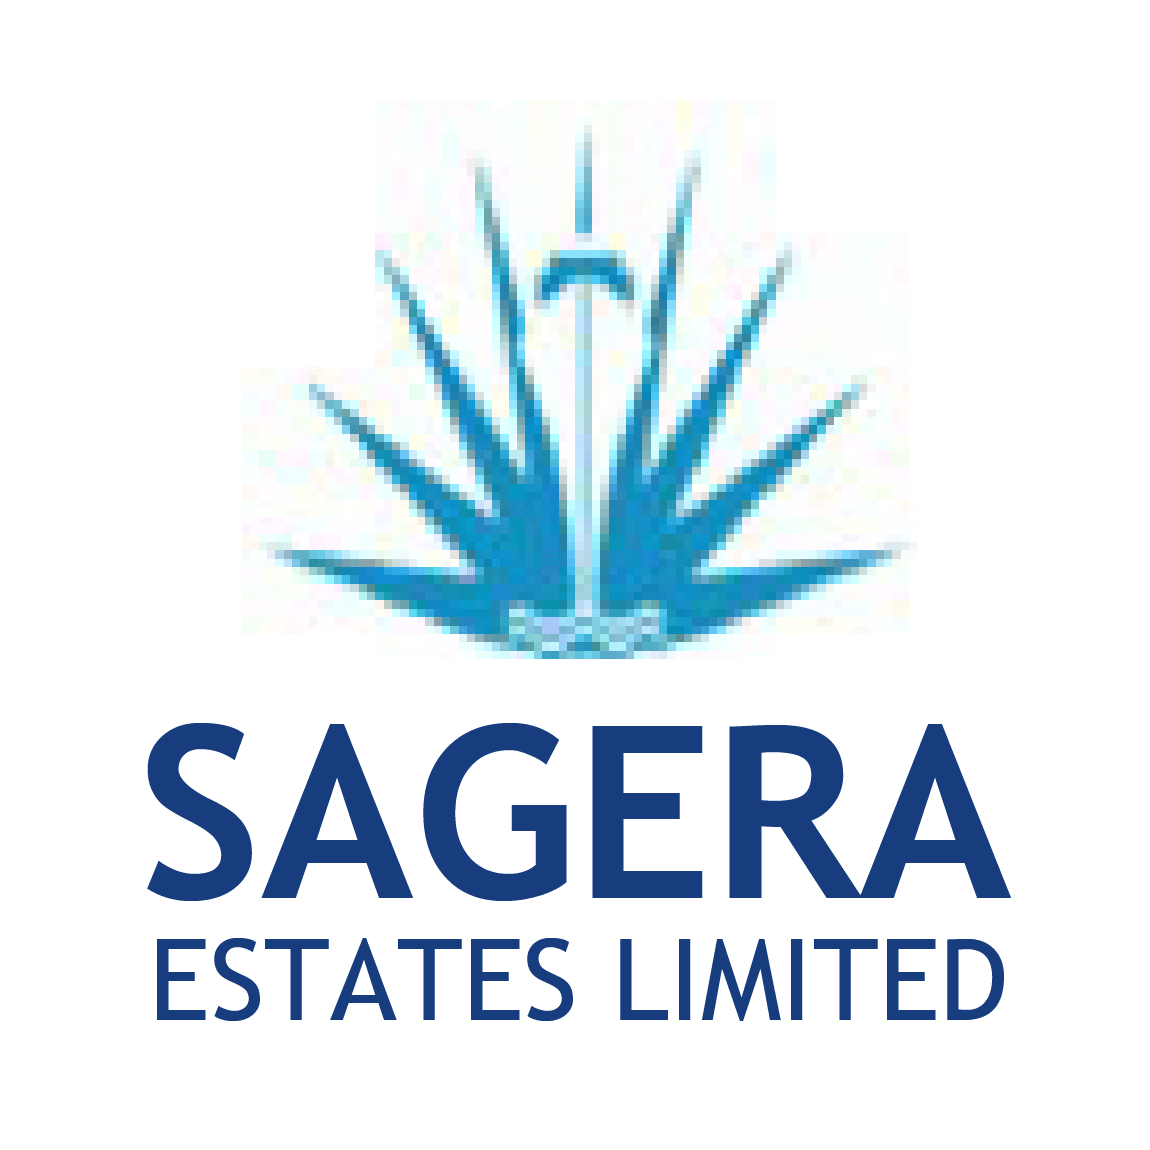 Sagera Estates Limited